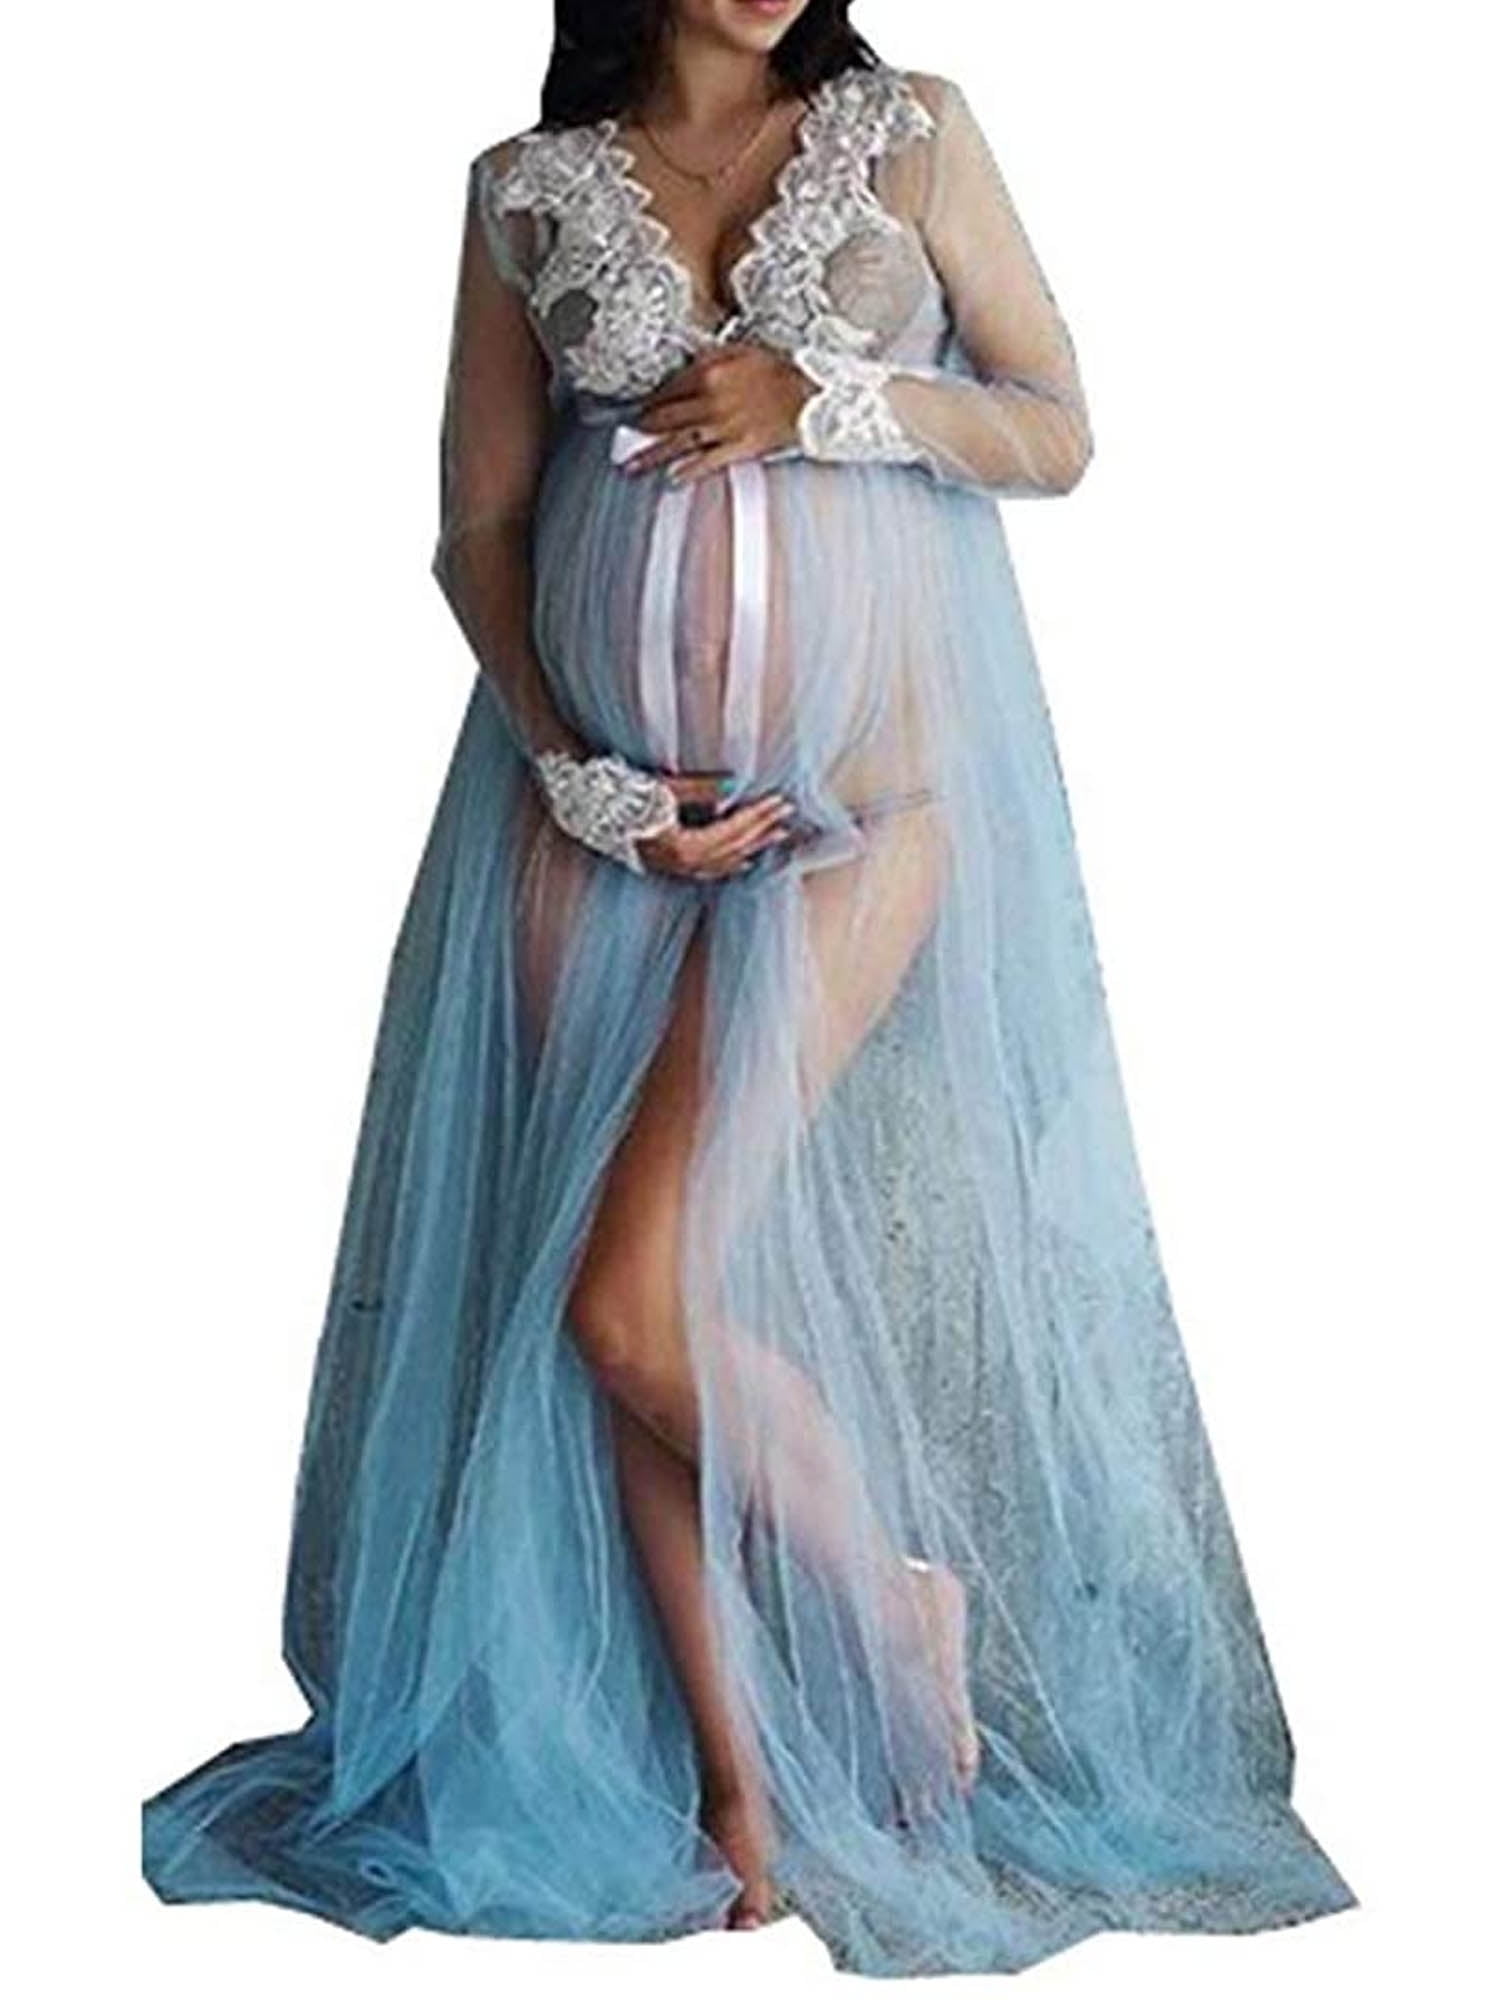 pregnancy dress